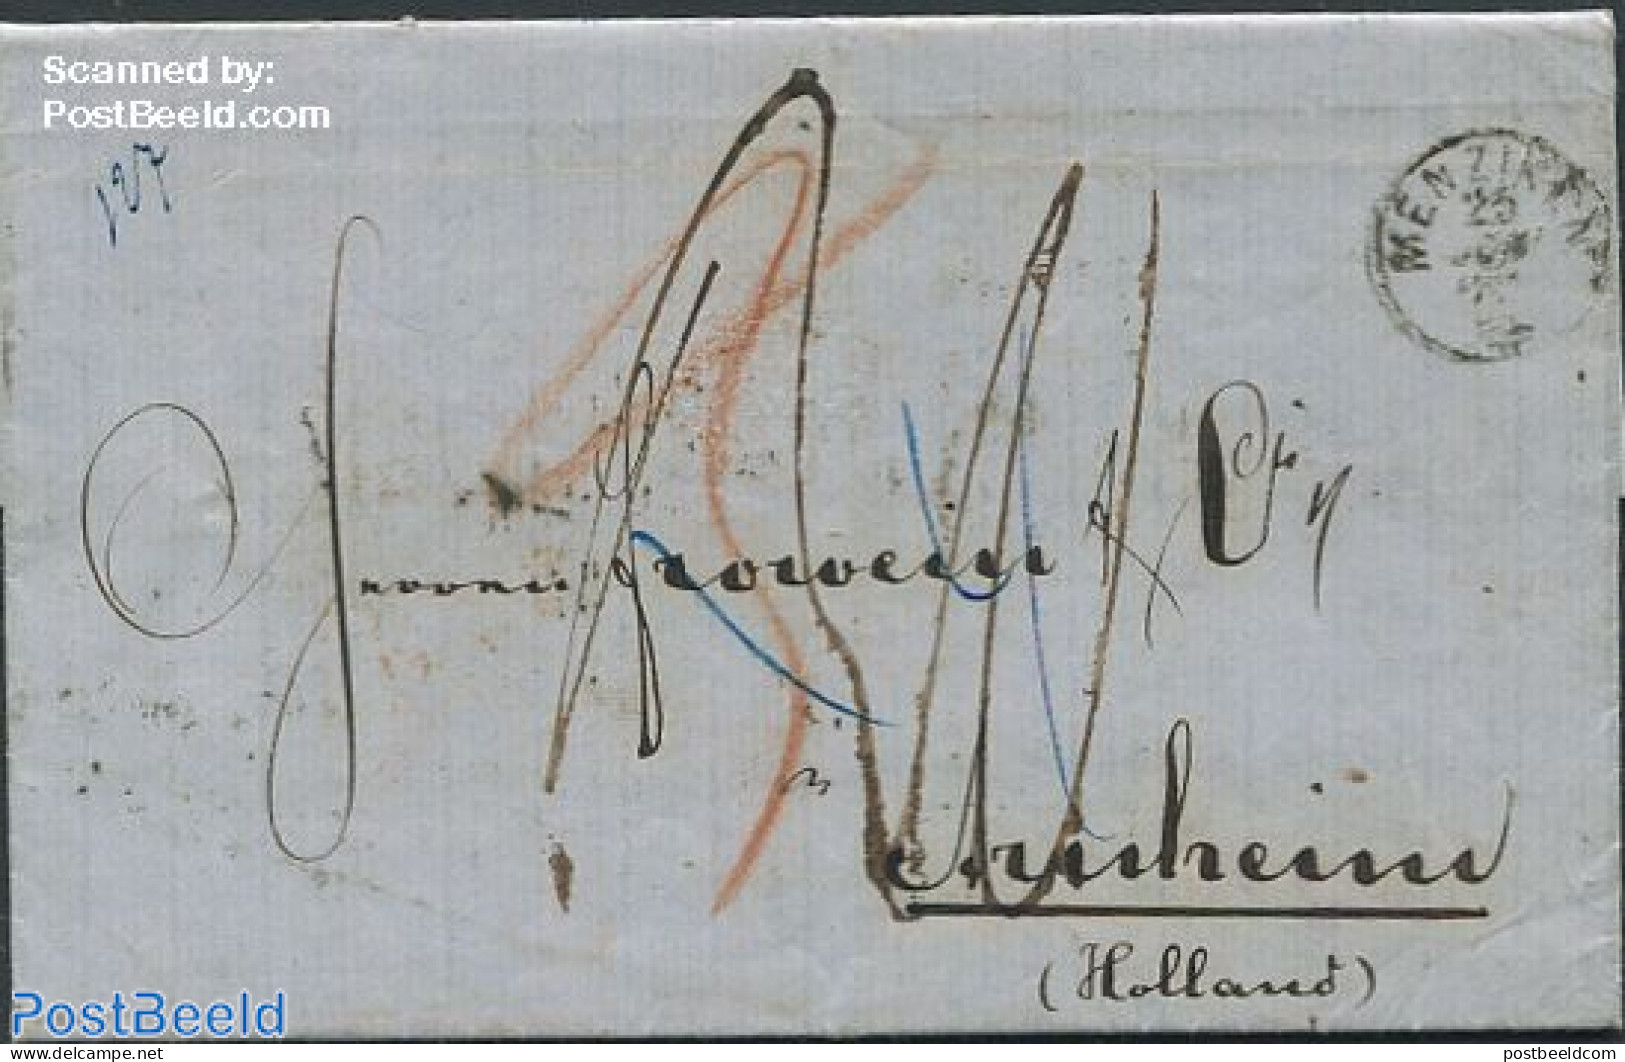 Switzerland 1861 Folding Letter From Zwitserland To The Netherlands, Postal History - Briefe U. Dokumente